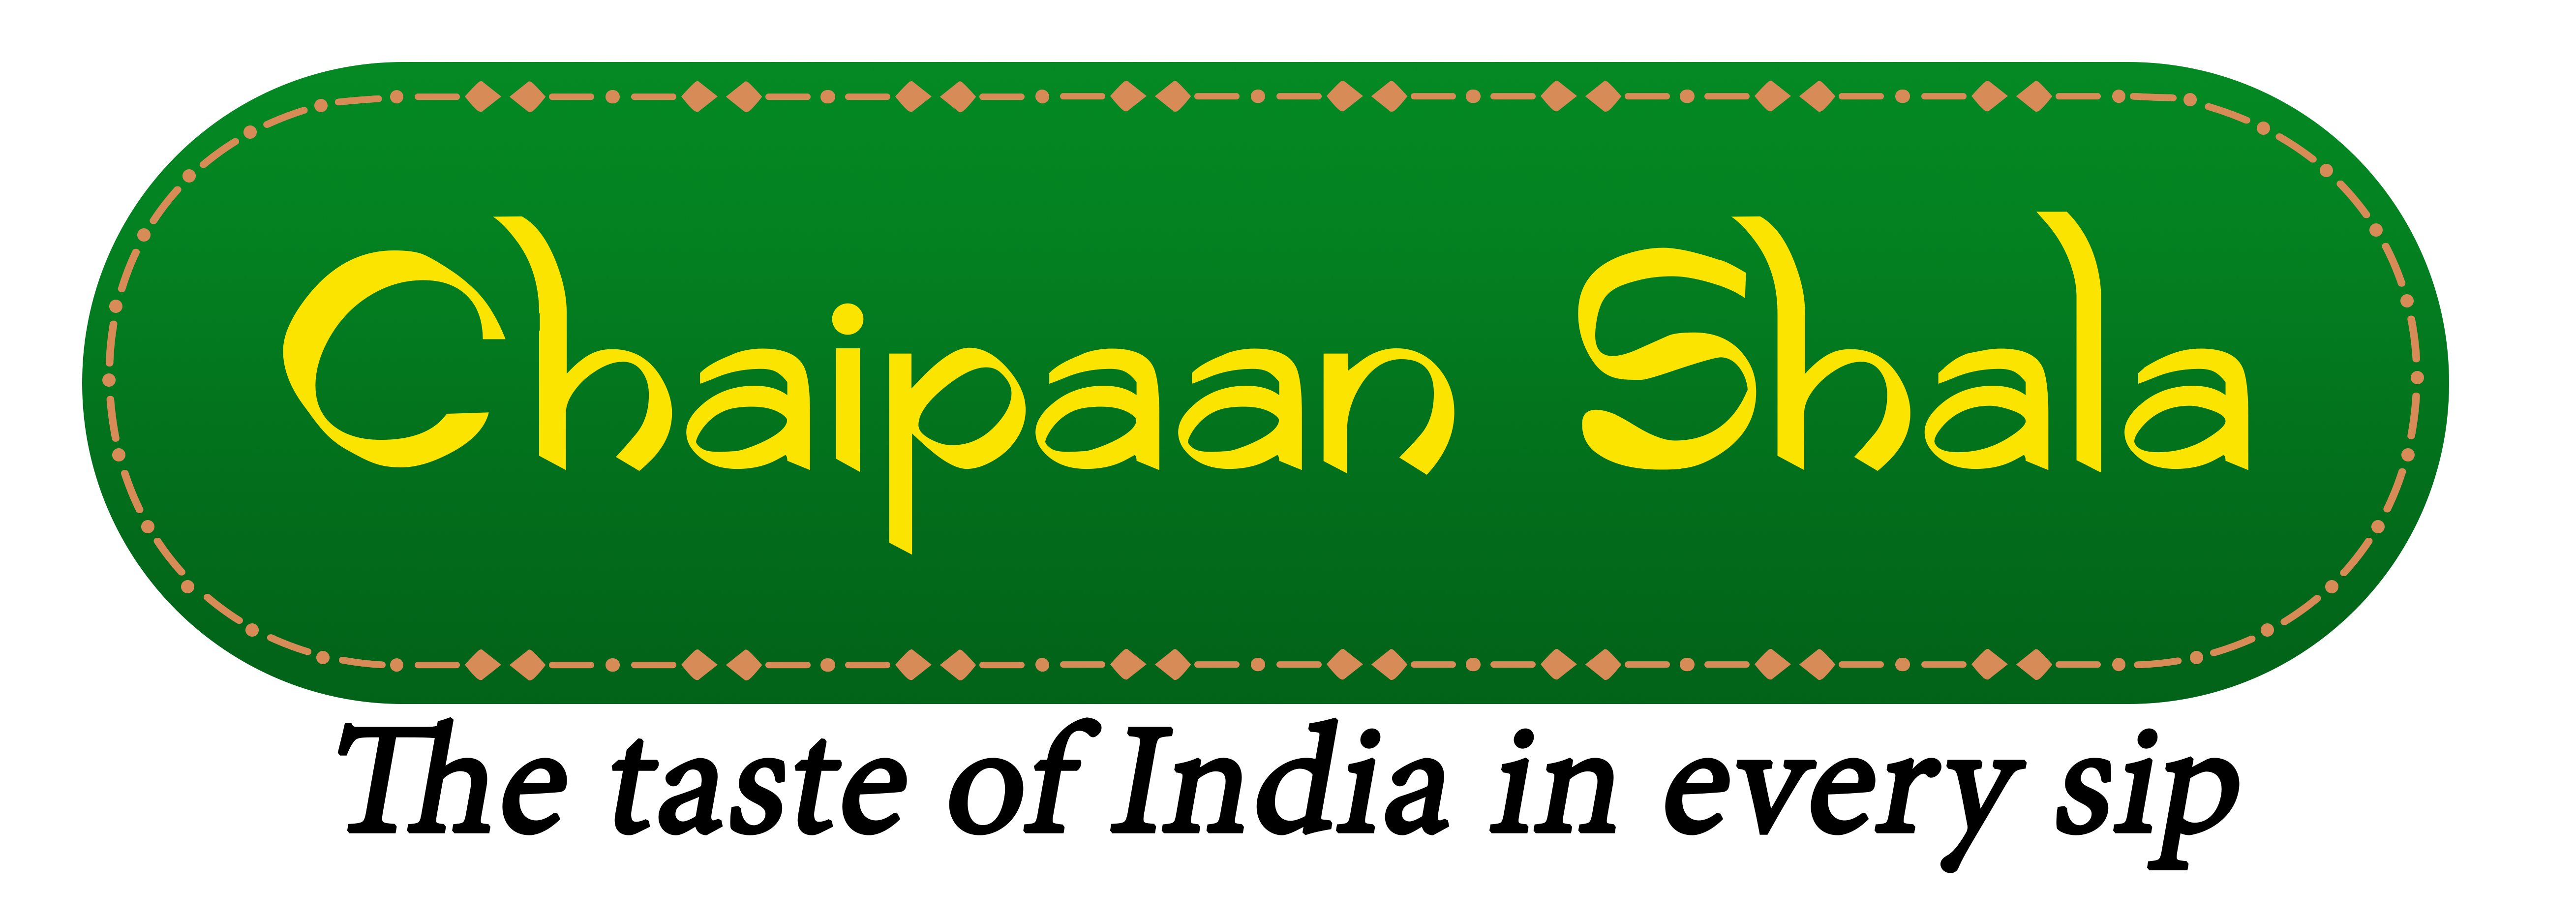 Chaipaan Shala –